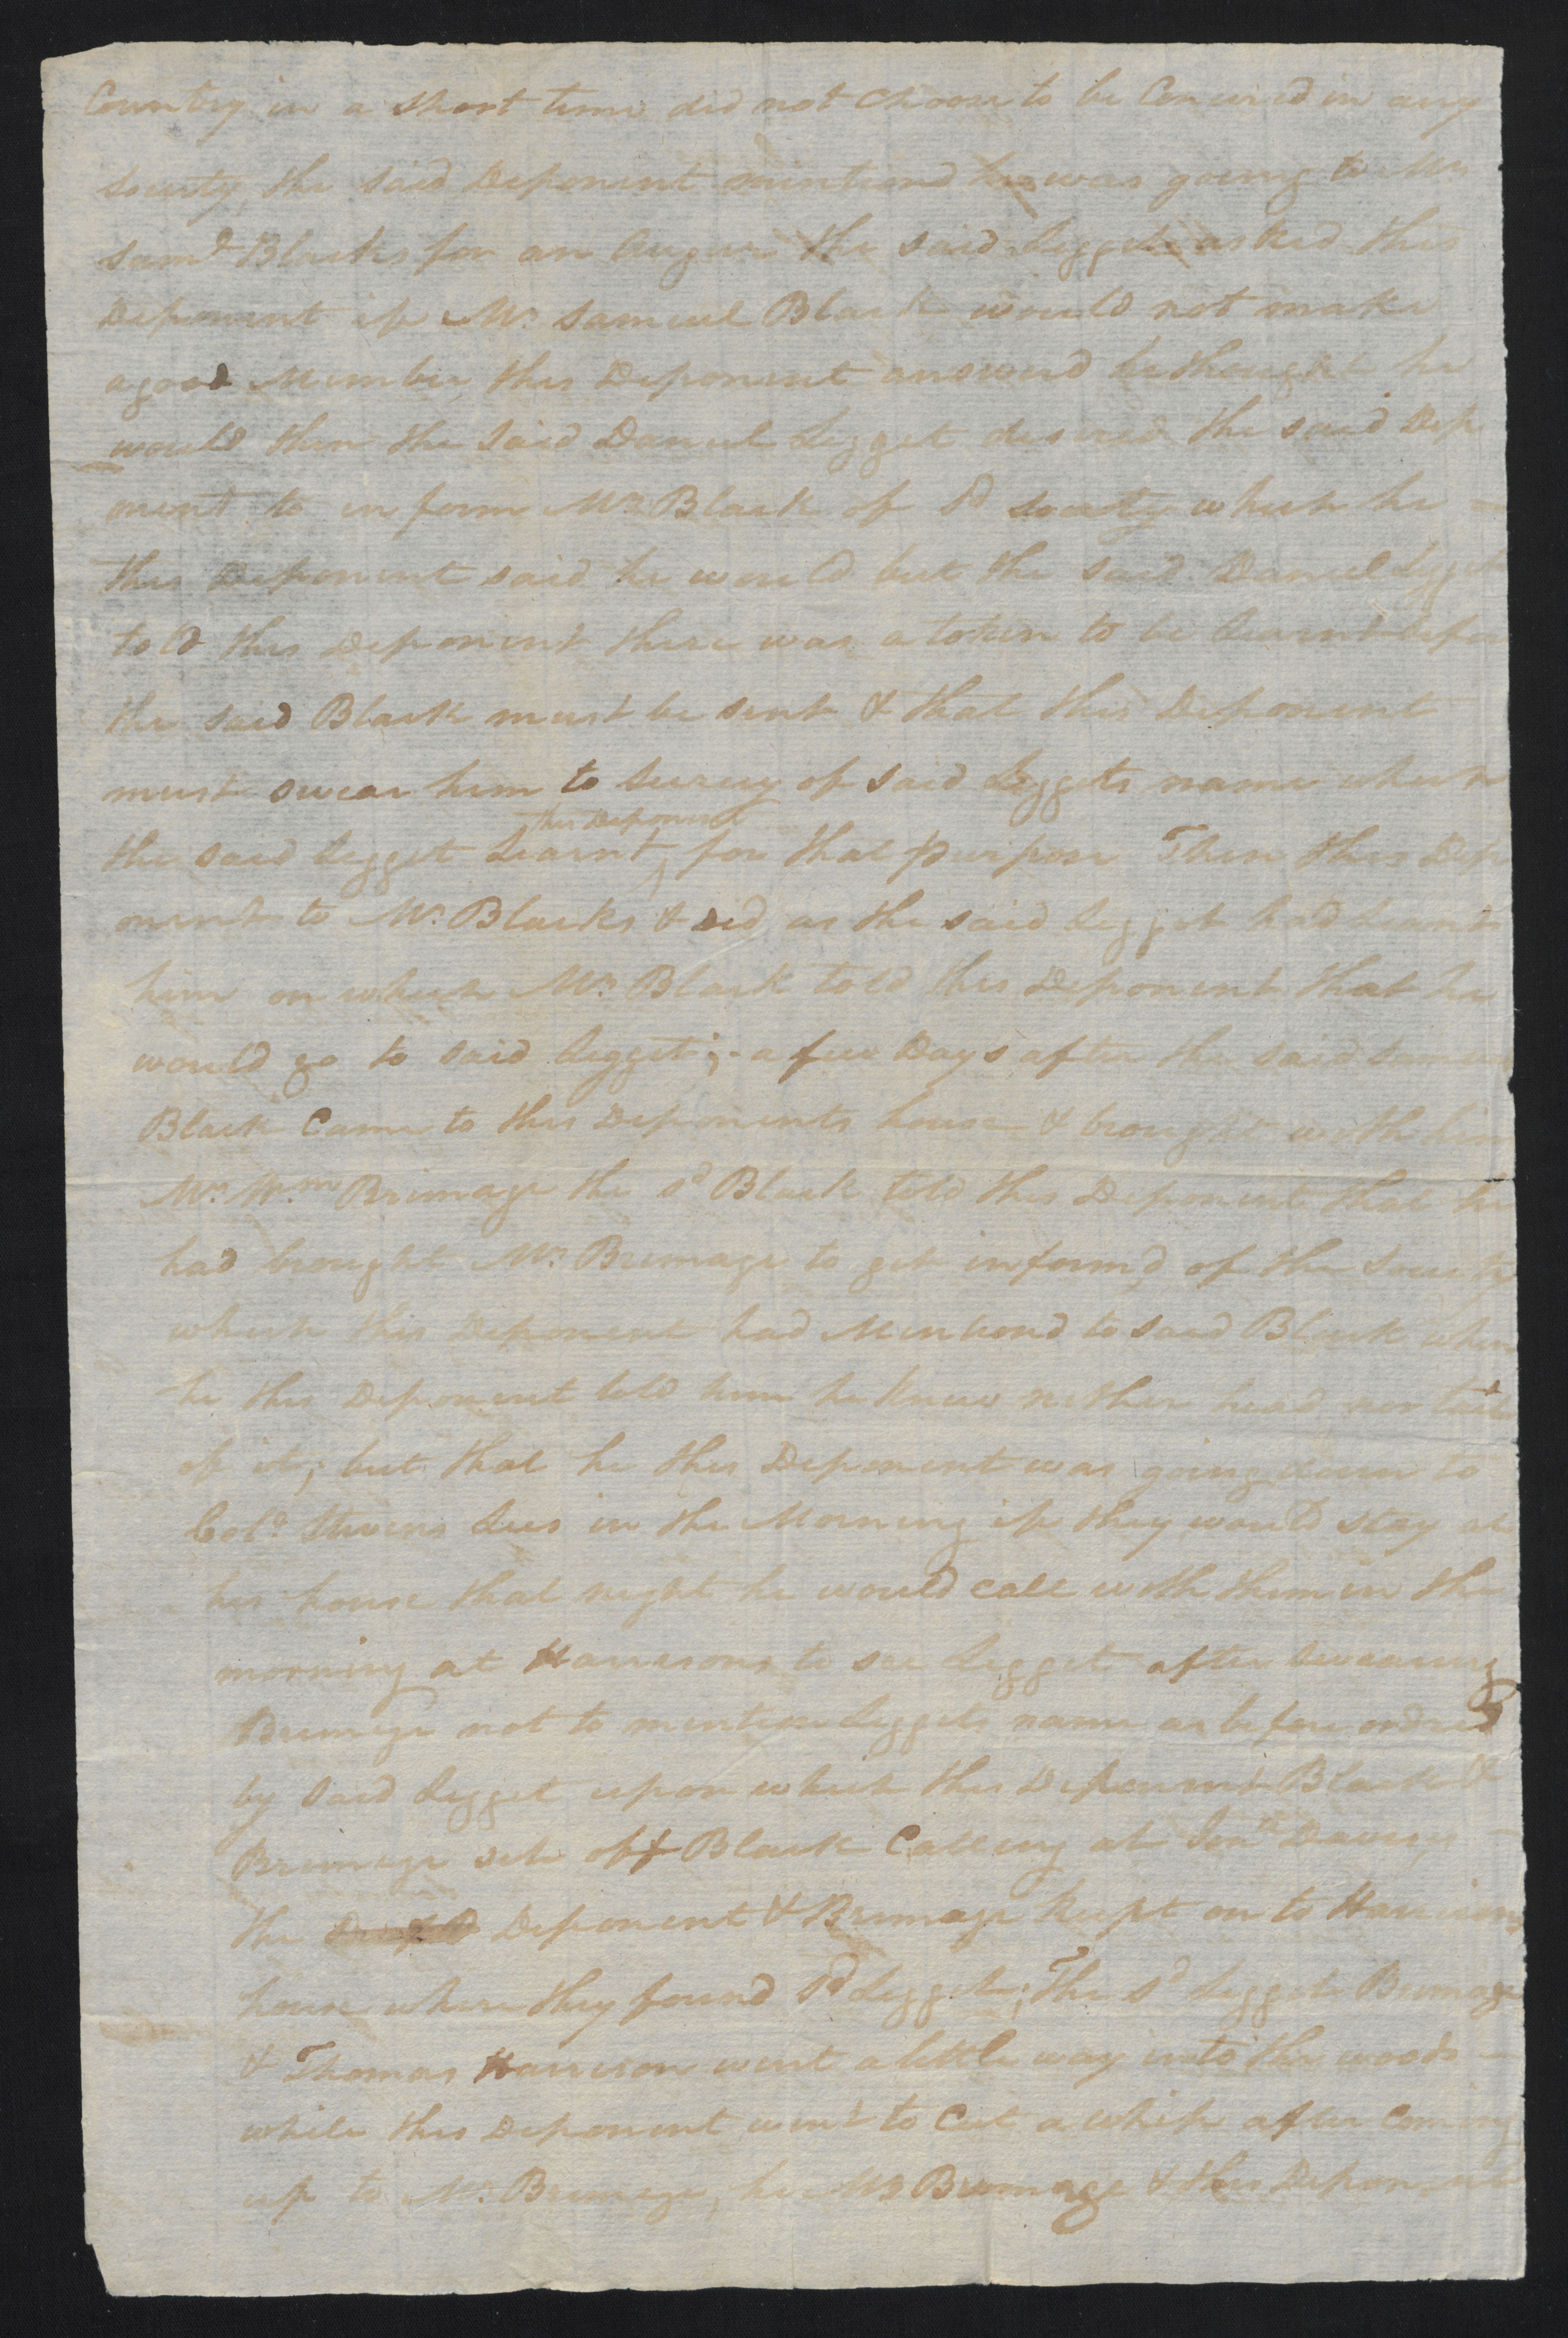 Deposition of John Stewart, 19 July 1777, page 2